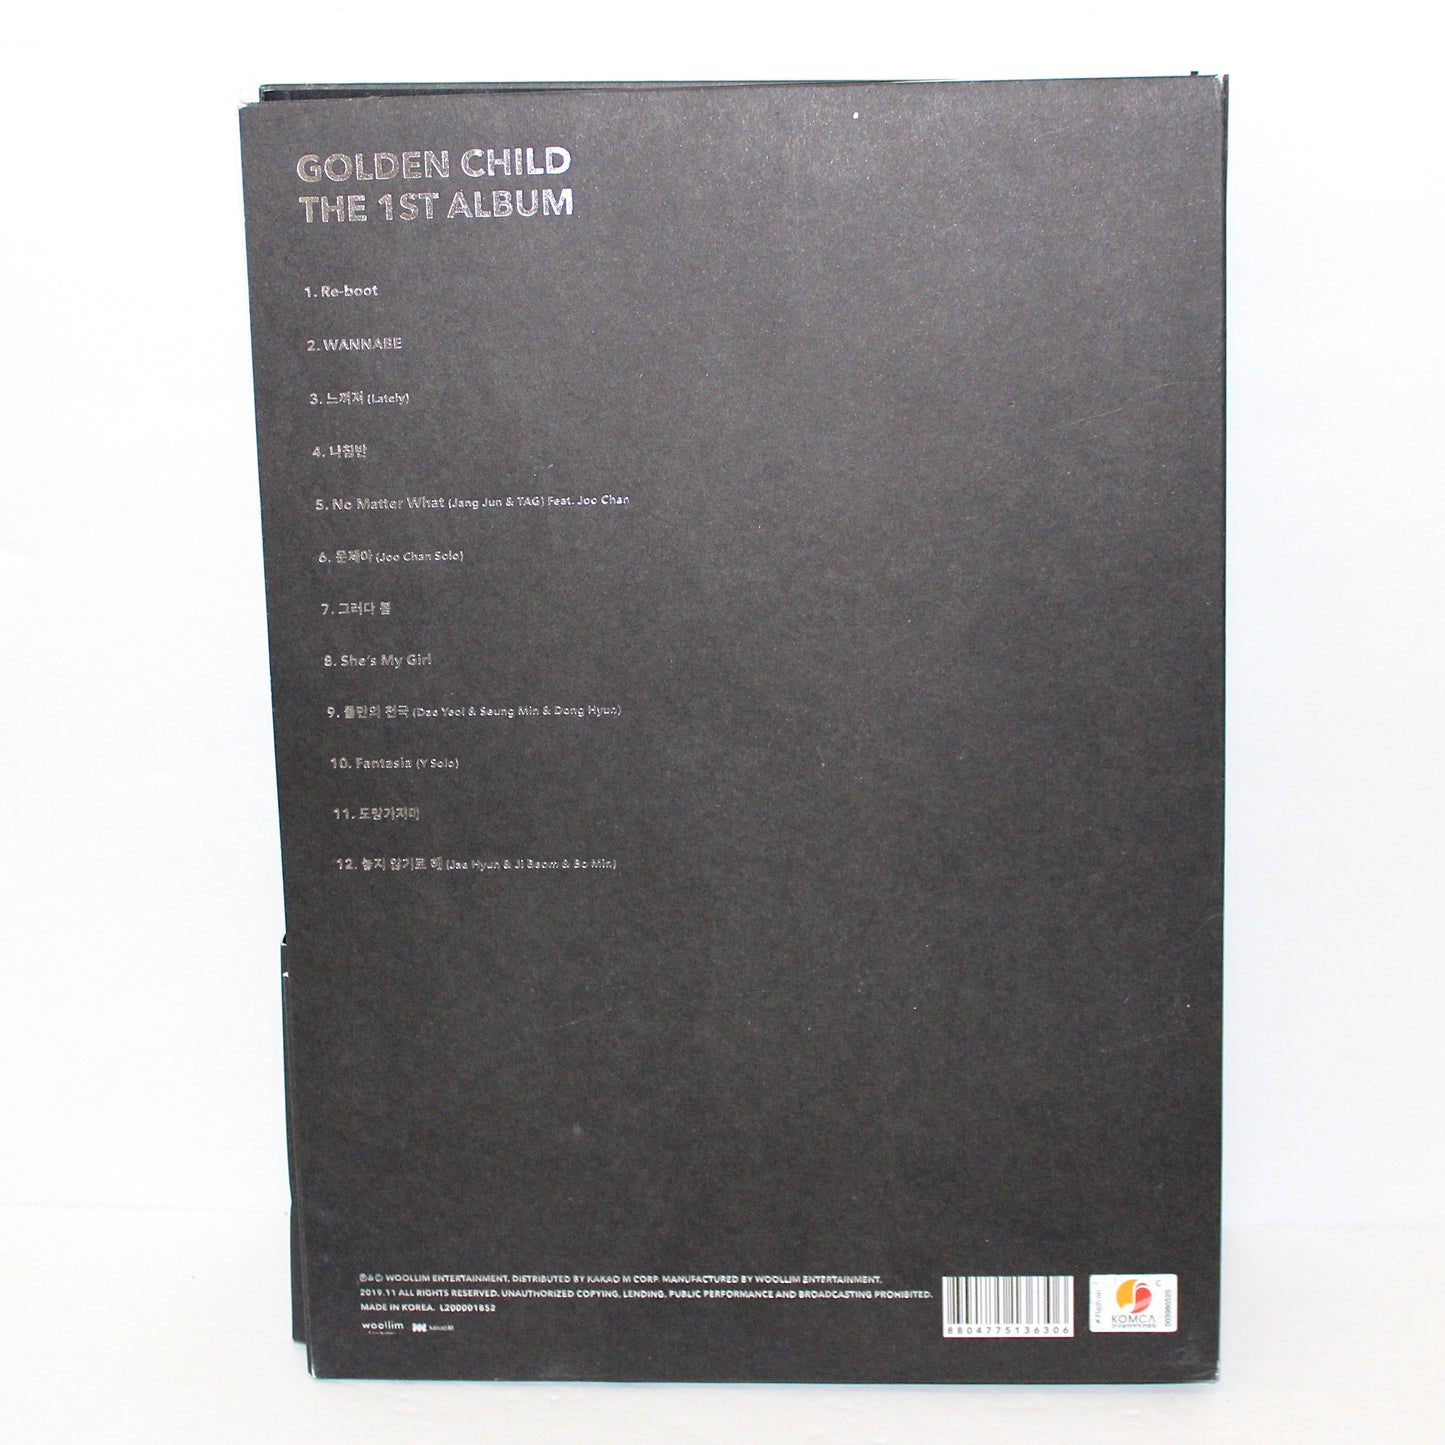 GOLDEN CHILD 1st Album: RE-boot | Normal Ver.